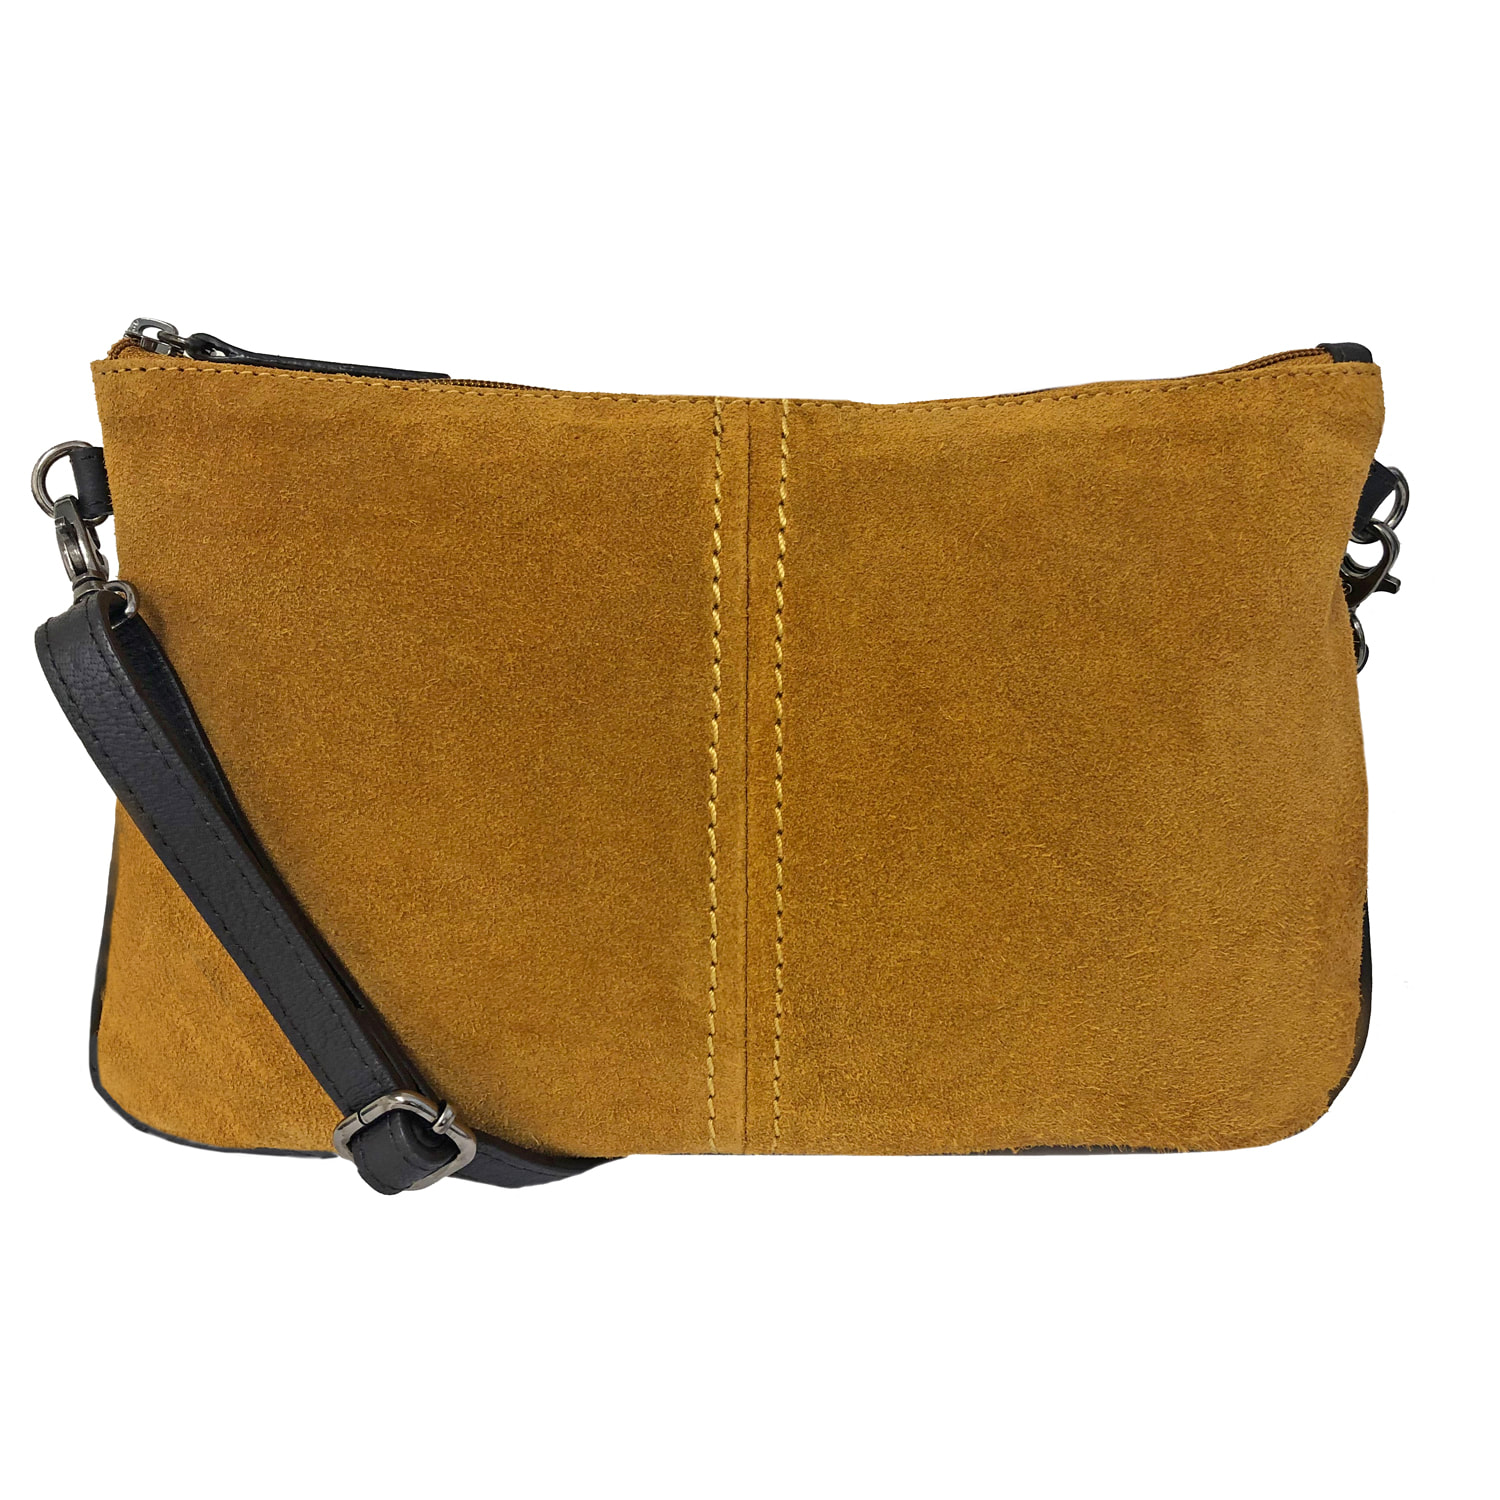 Rowallan Mustard Suede and Brown Leather Shoulder Bag or Clutch Bag